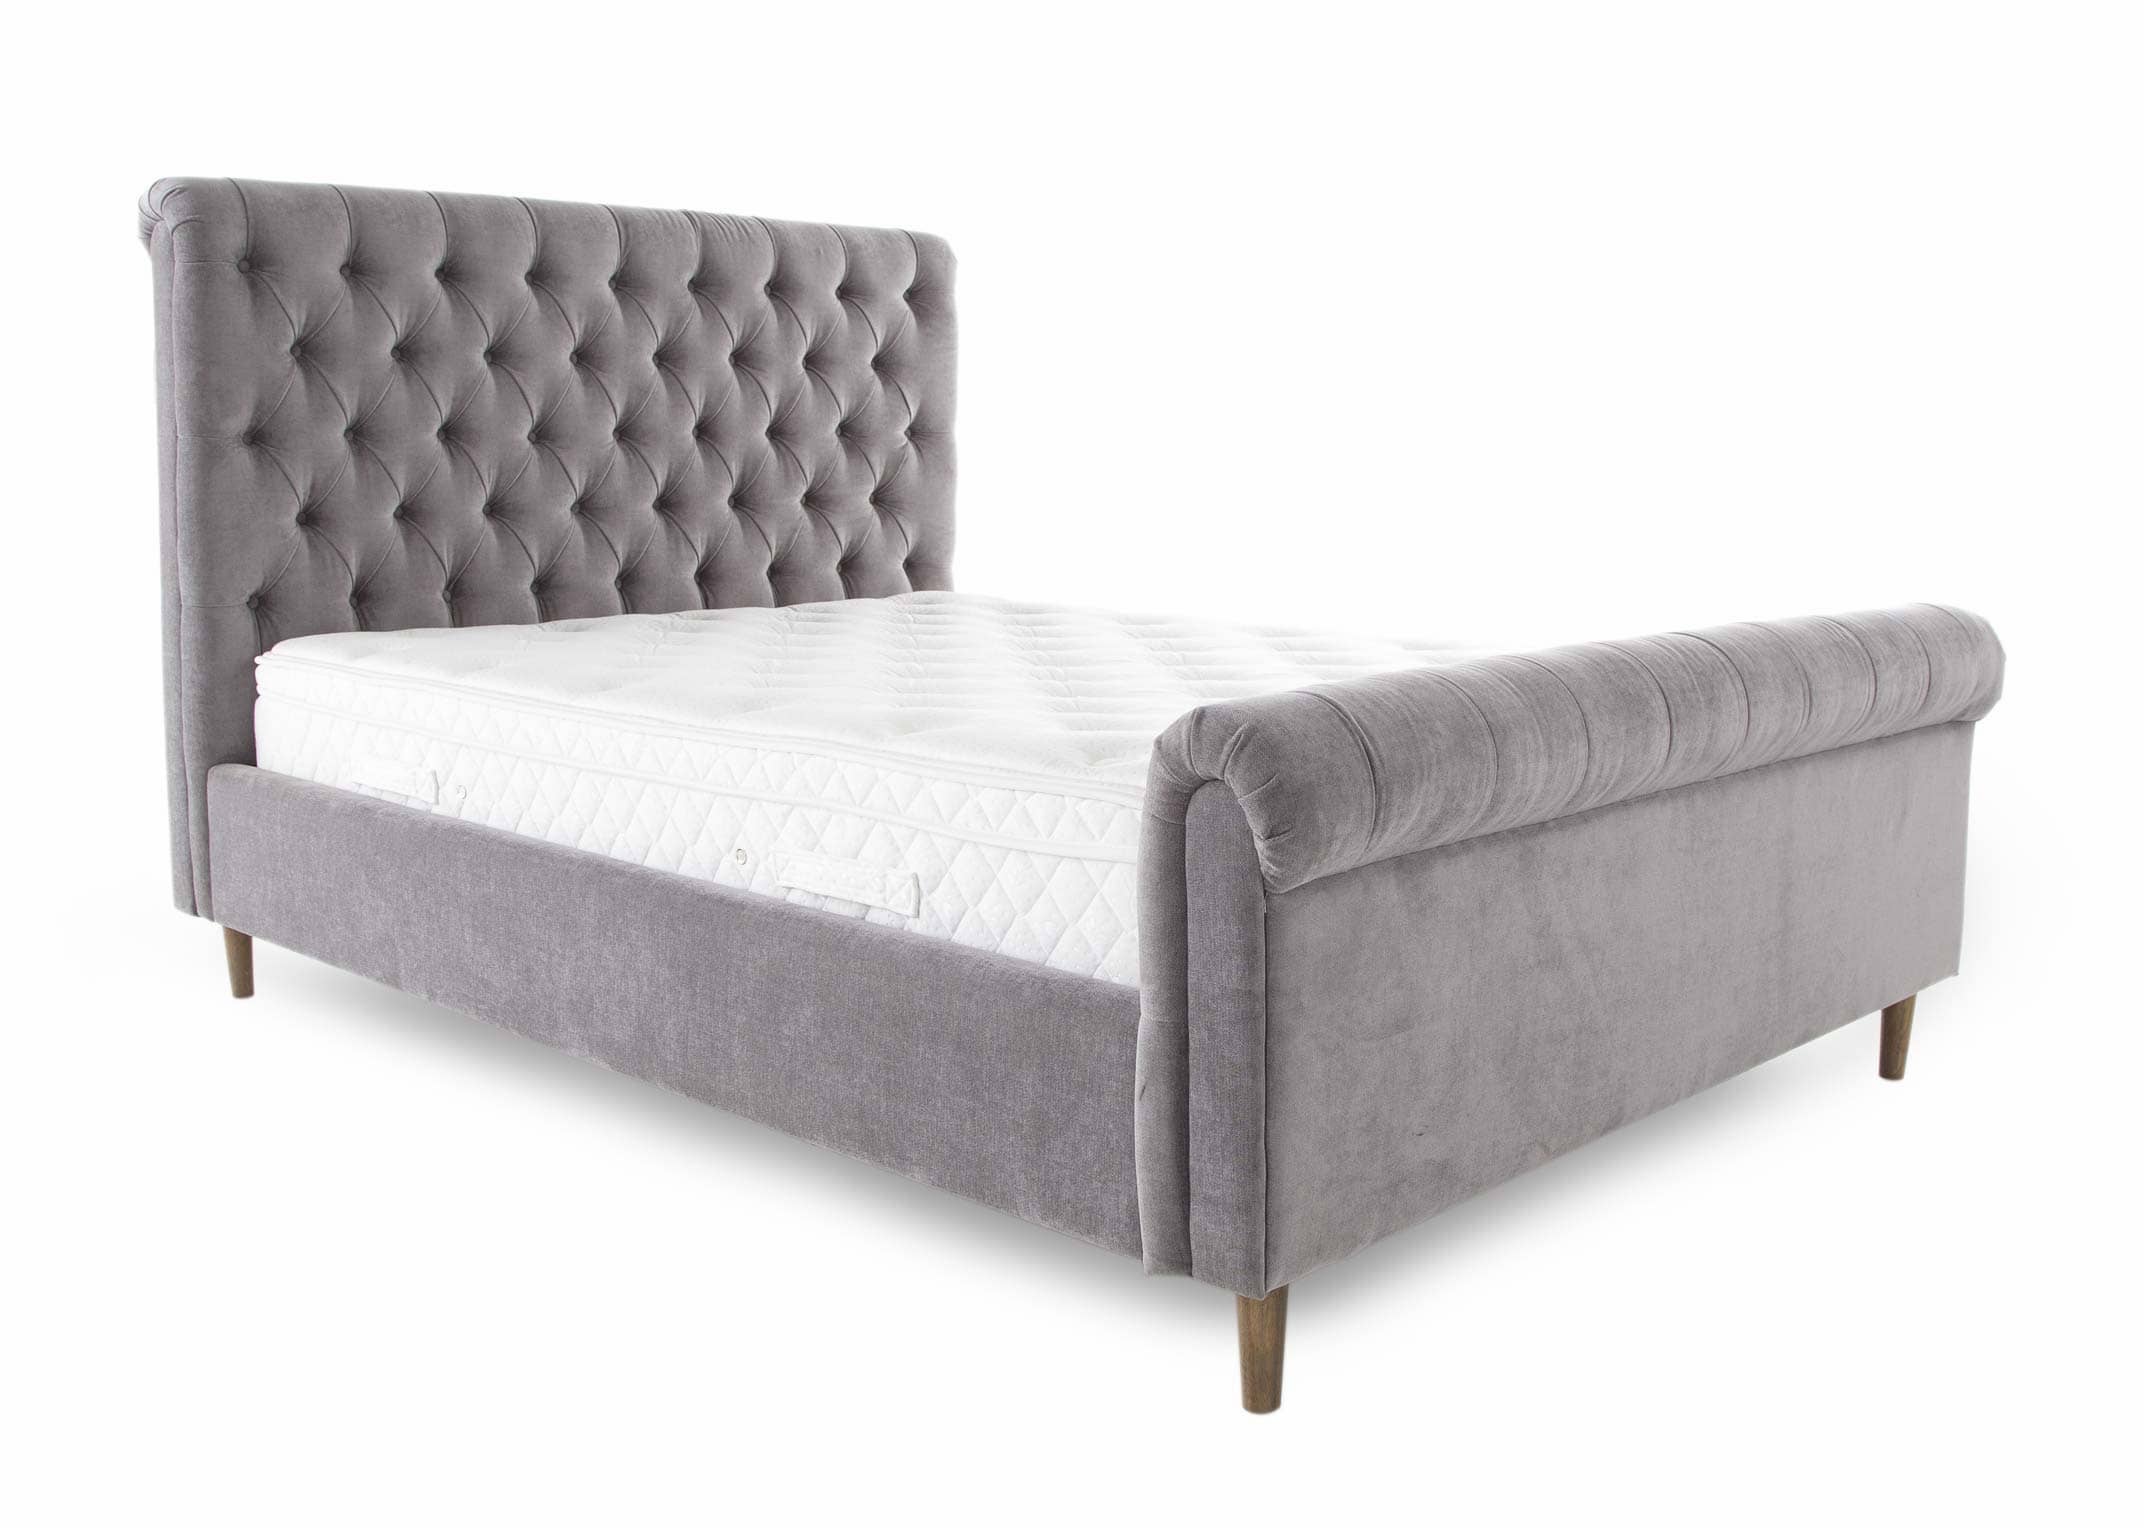 5ft Grey Fabric Bed Frame Sofia, Grey Upholstered King Size Bed Frame